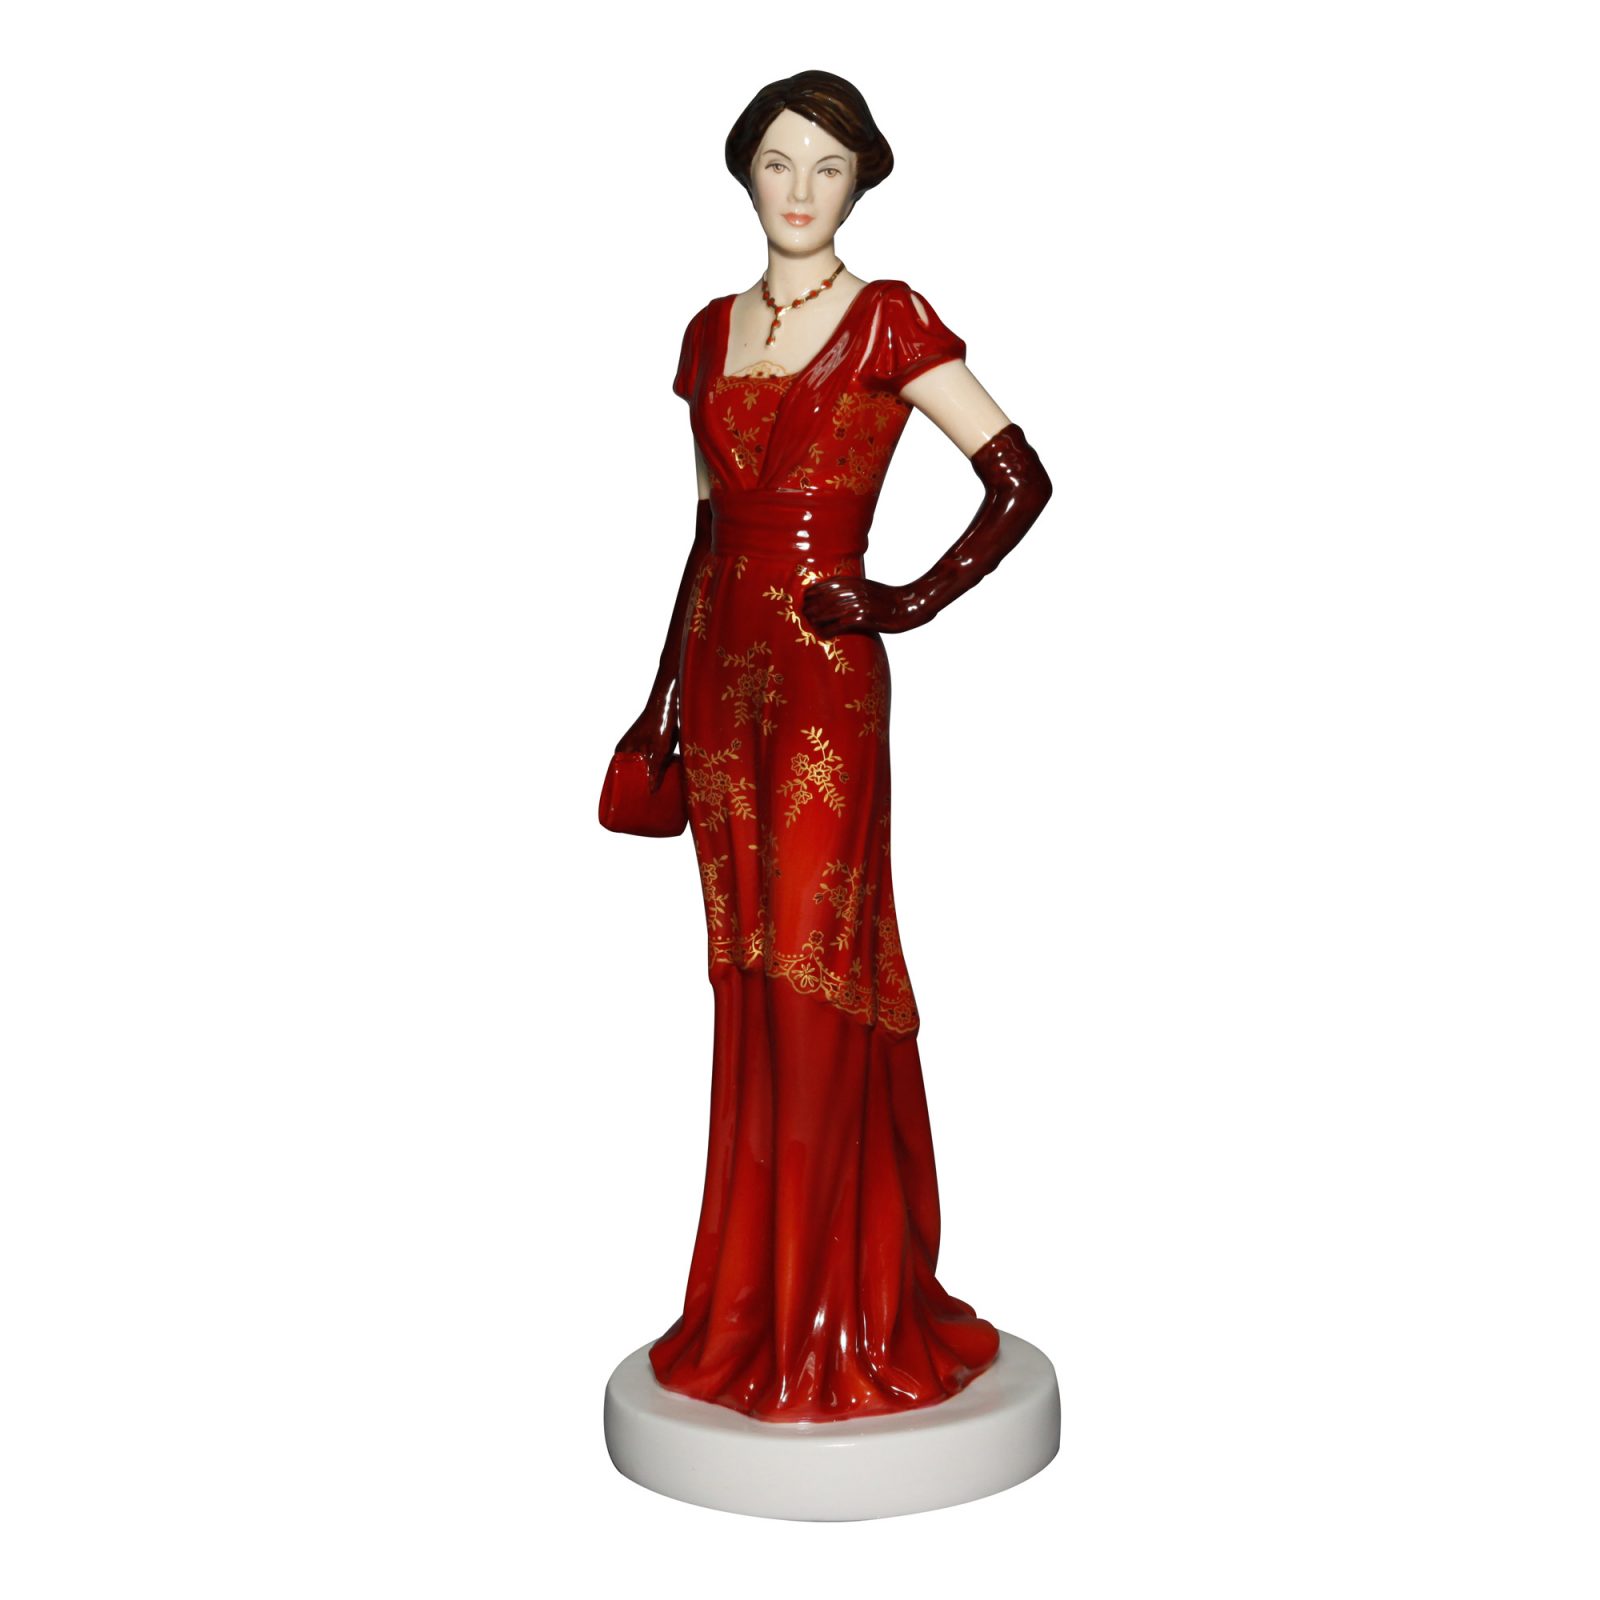 Lady Mary HN839 - Downton Abbe - Royal Doulton Figurine